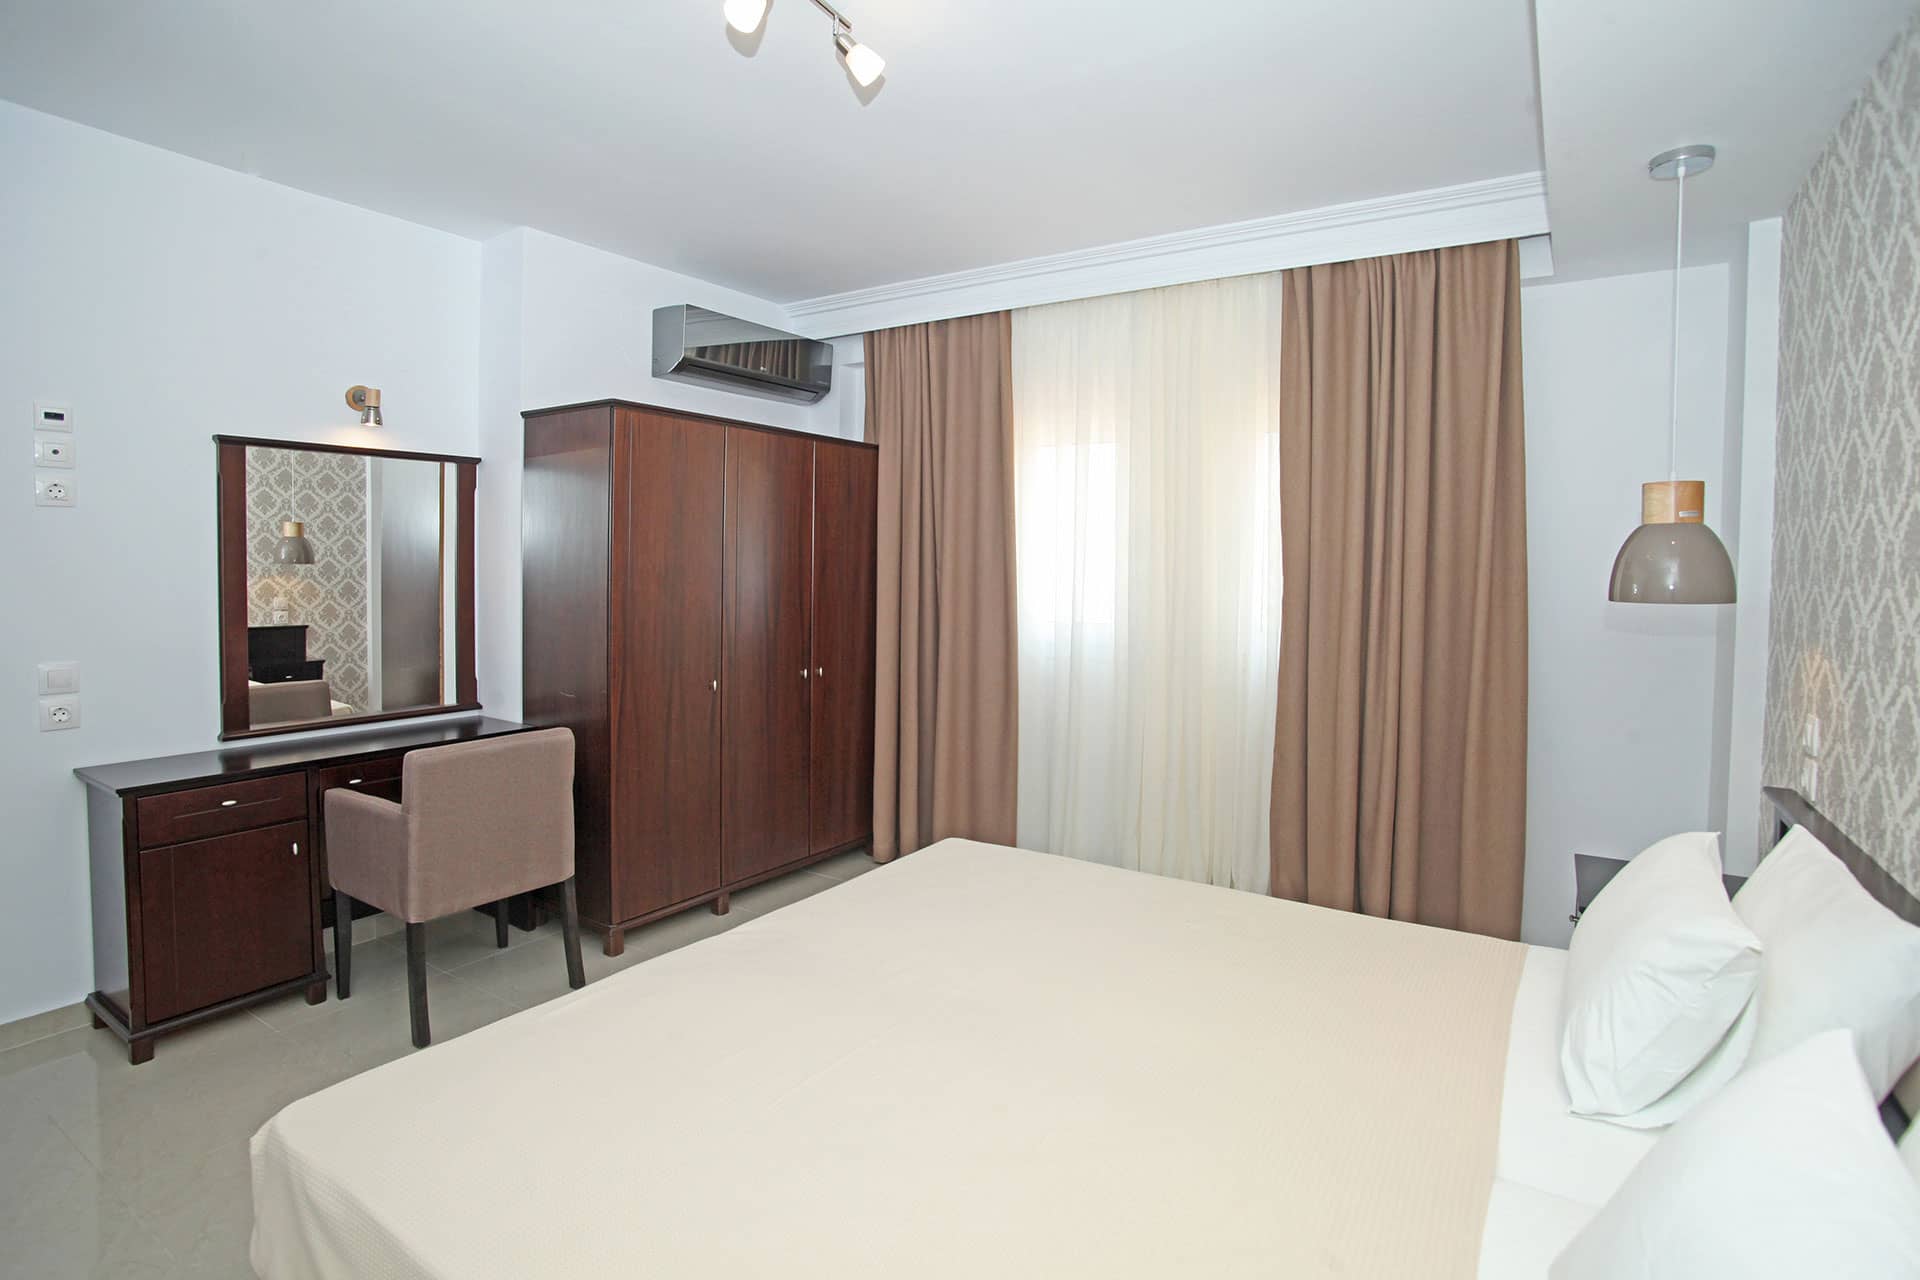 Hotel Naias apartment bedroom.jpg